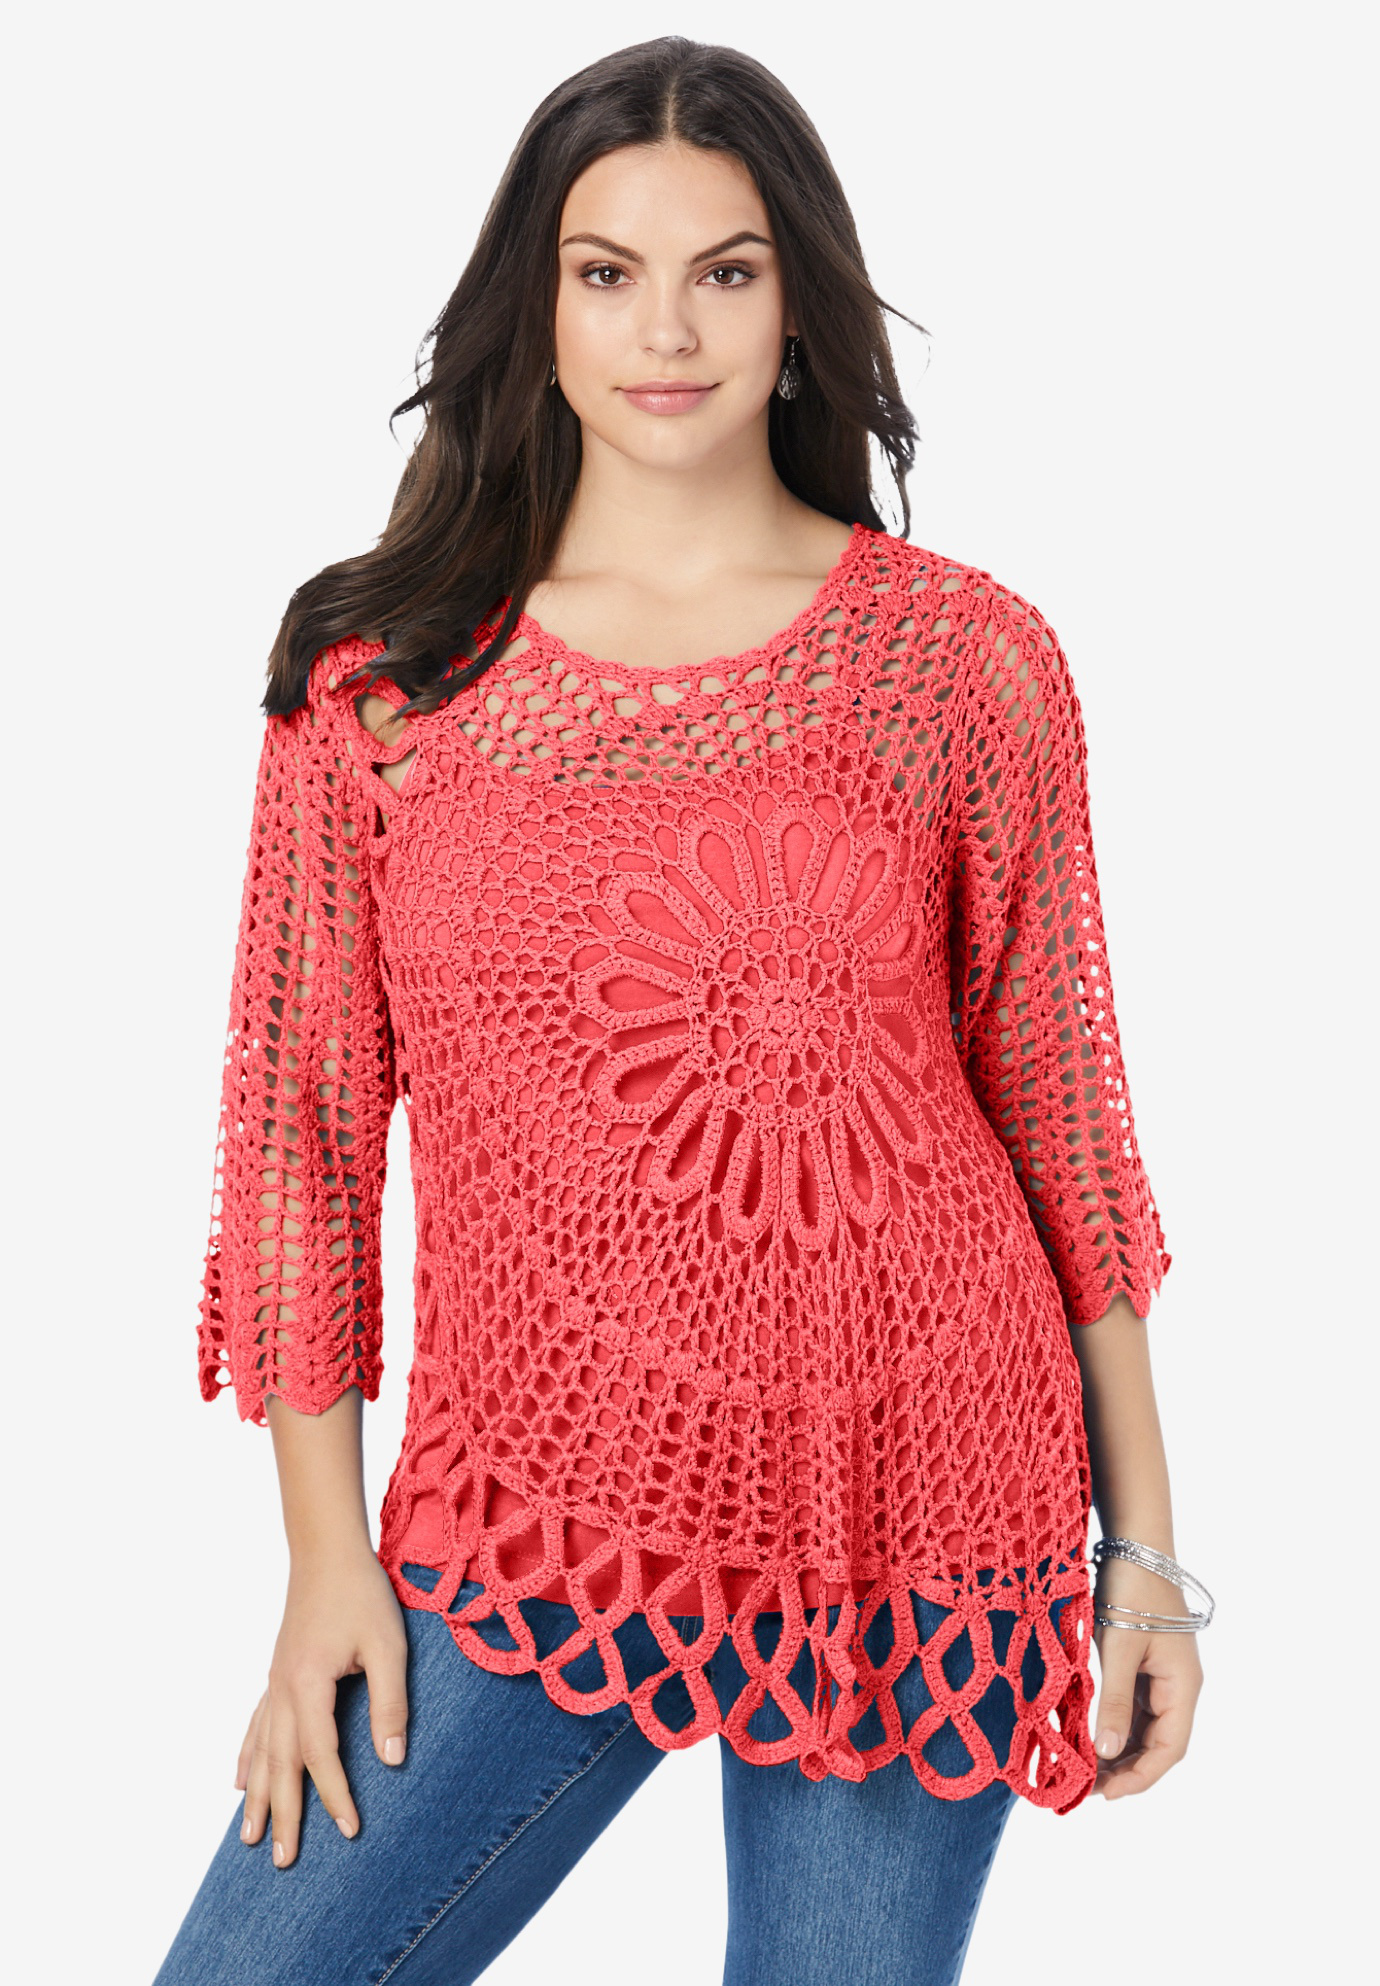 Starburst Crochet Sweater | Catherine's